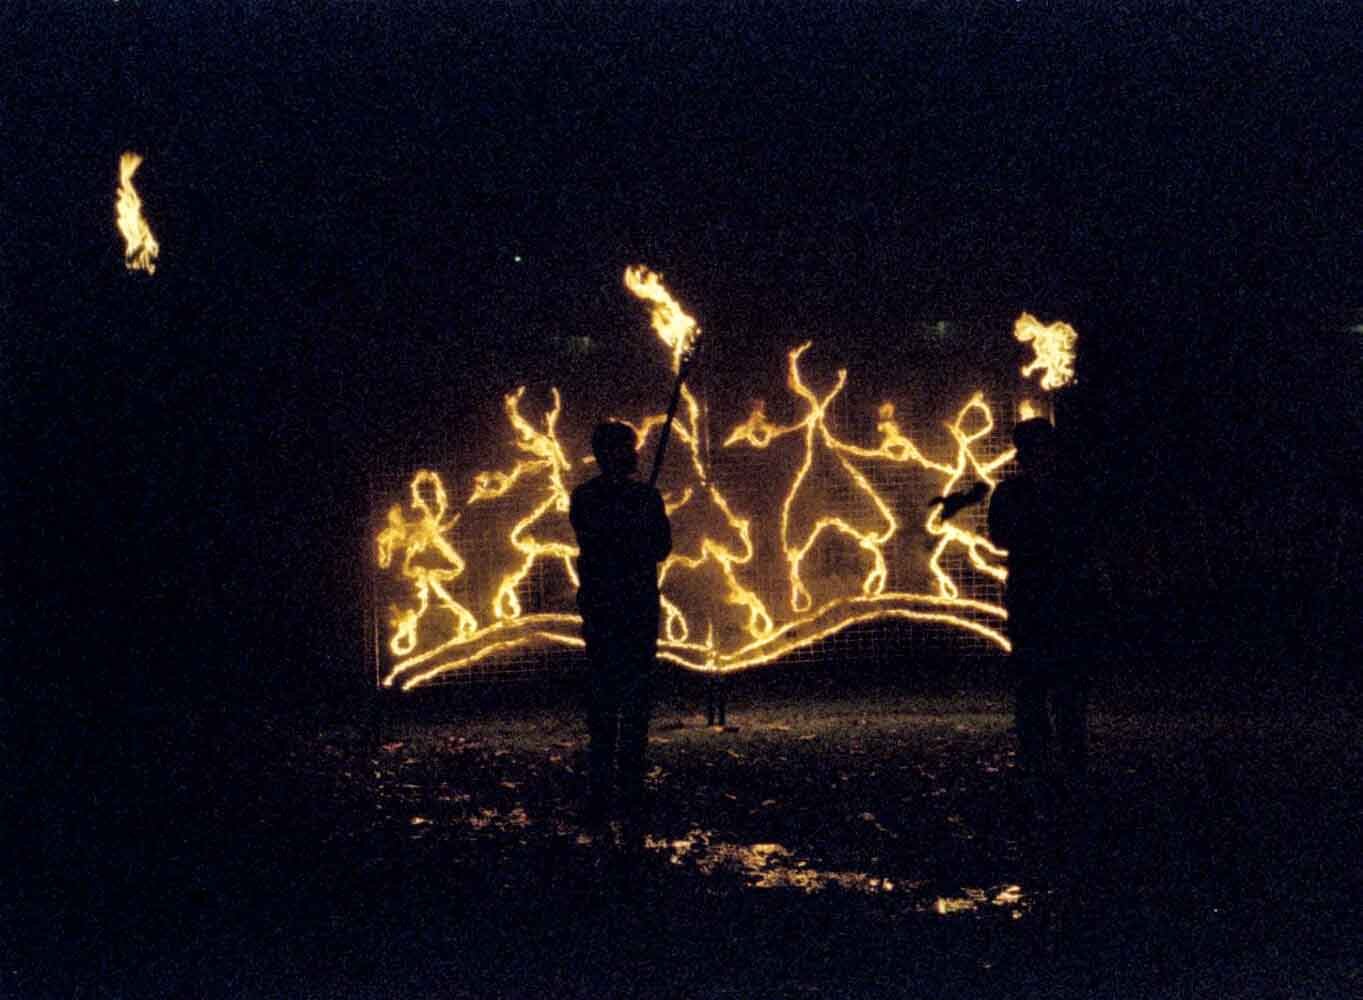 Enchanted Fire people.jpg